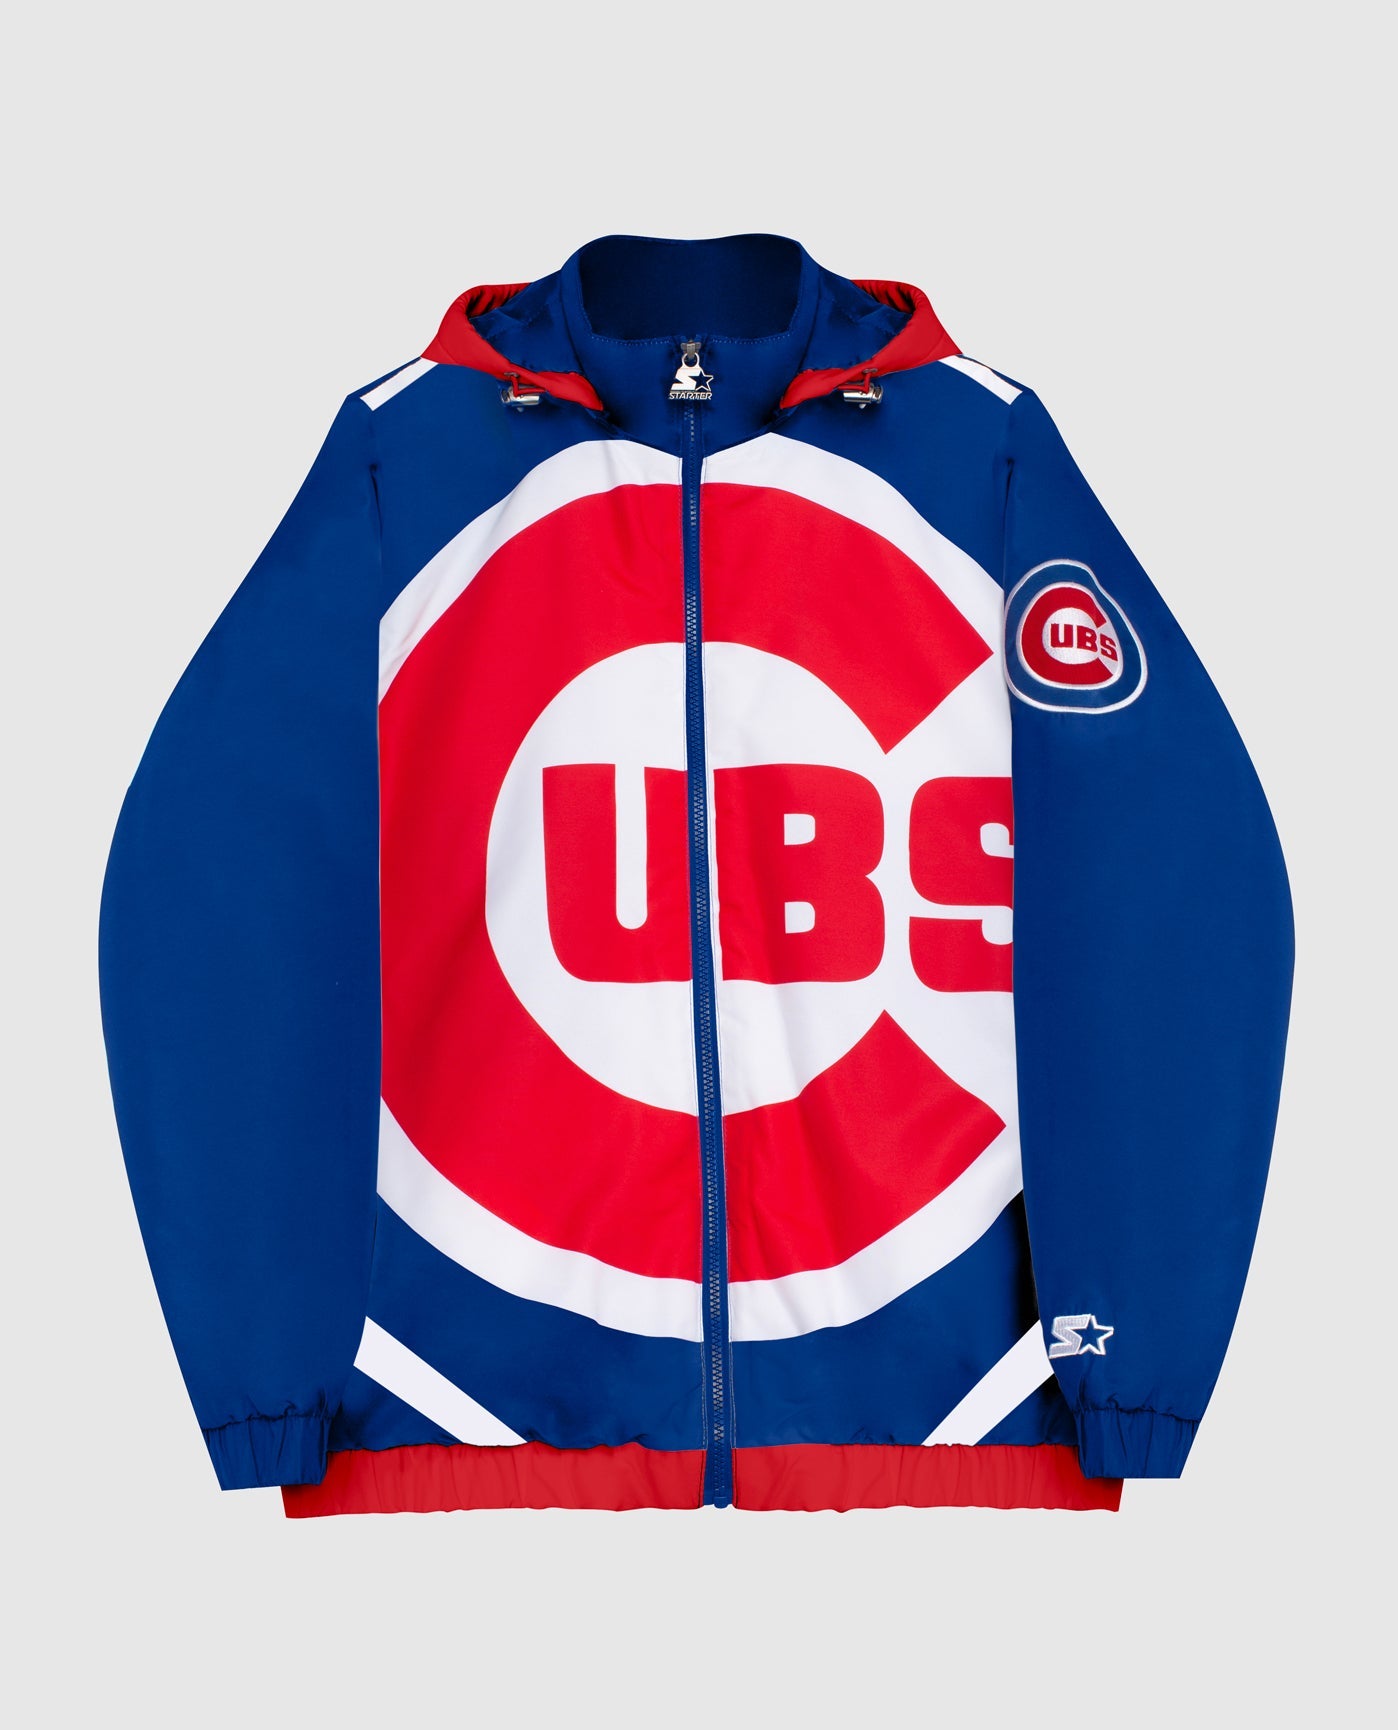 Starter Mens Chicago Cubs Hoodie Sweatshirt